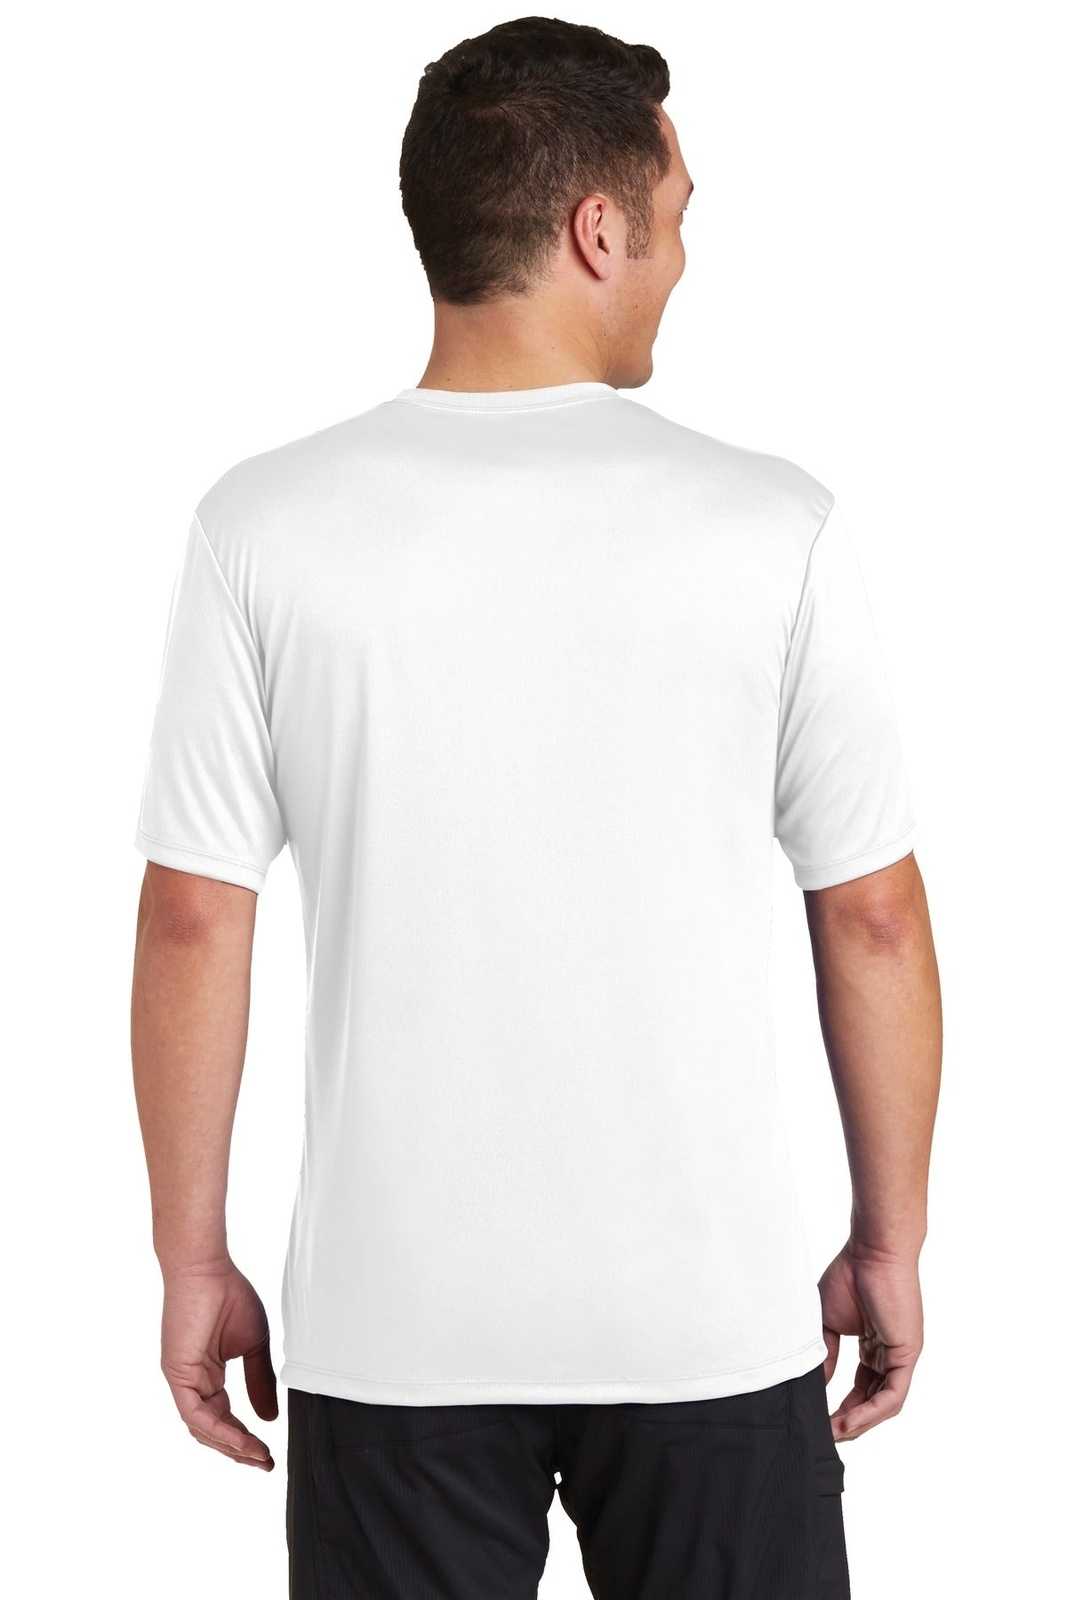 Hanes 4820 Cool Dri Performance T-Shirt - White - HIT a Double